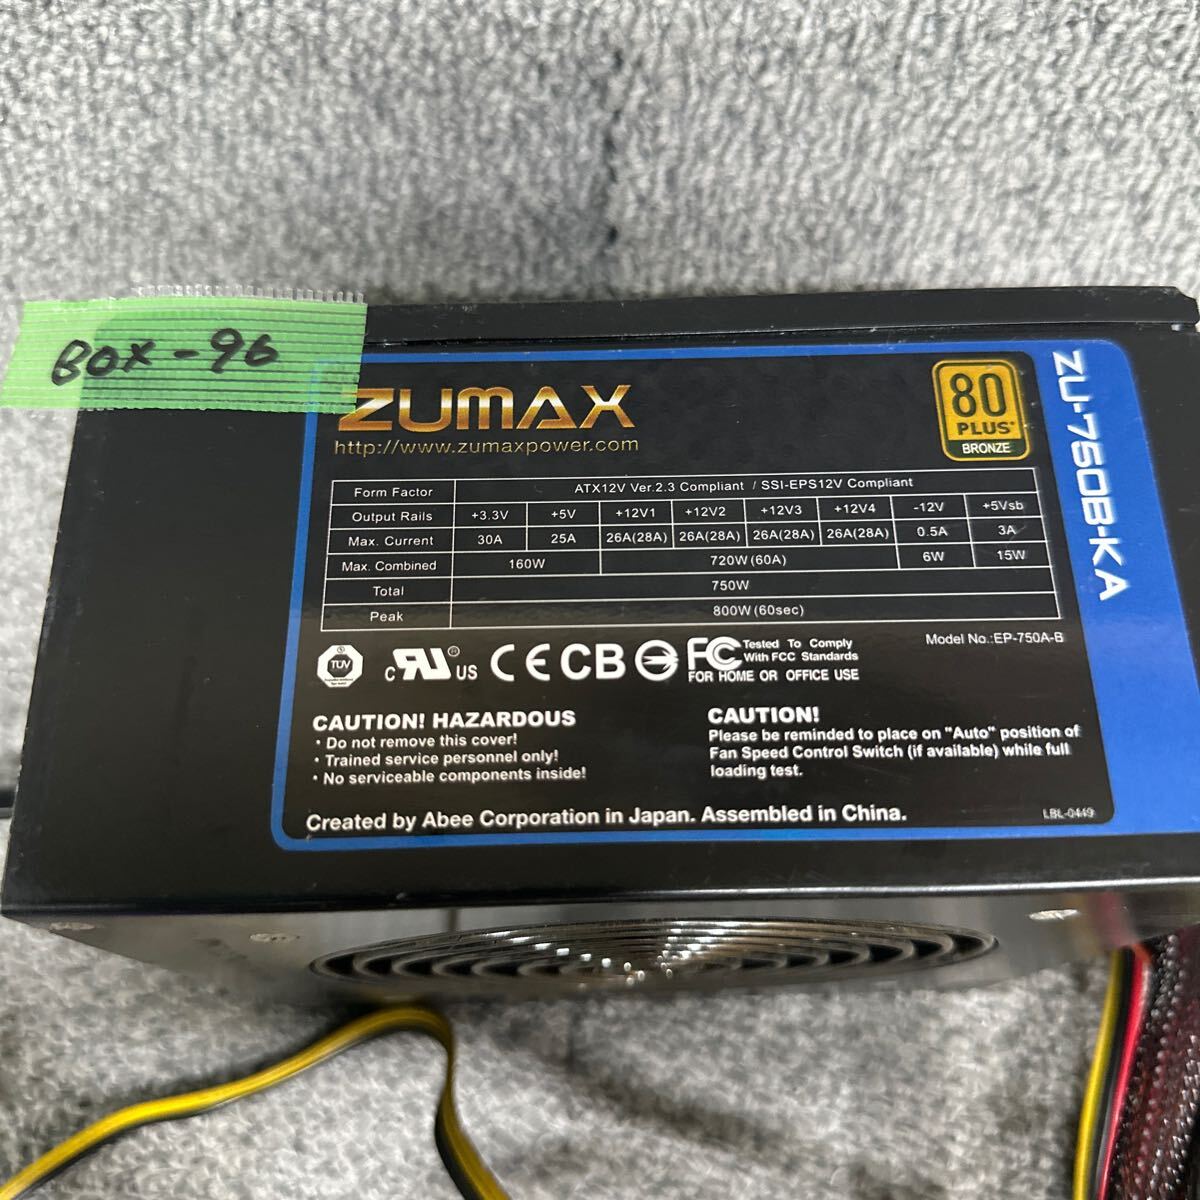 GK super-discount BOX-96 PC power supply BOX ZUMAX ZU-750B-KA 750W 80PLUS BRONZE power supply unit voltage has confirmed secondhand goods 